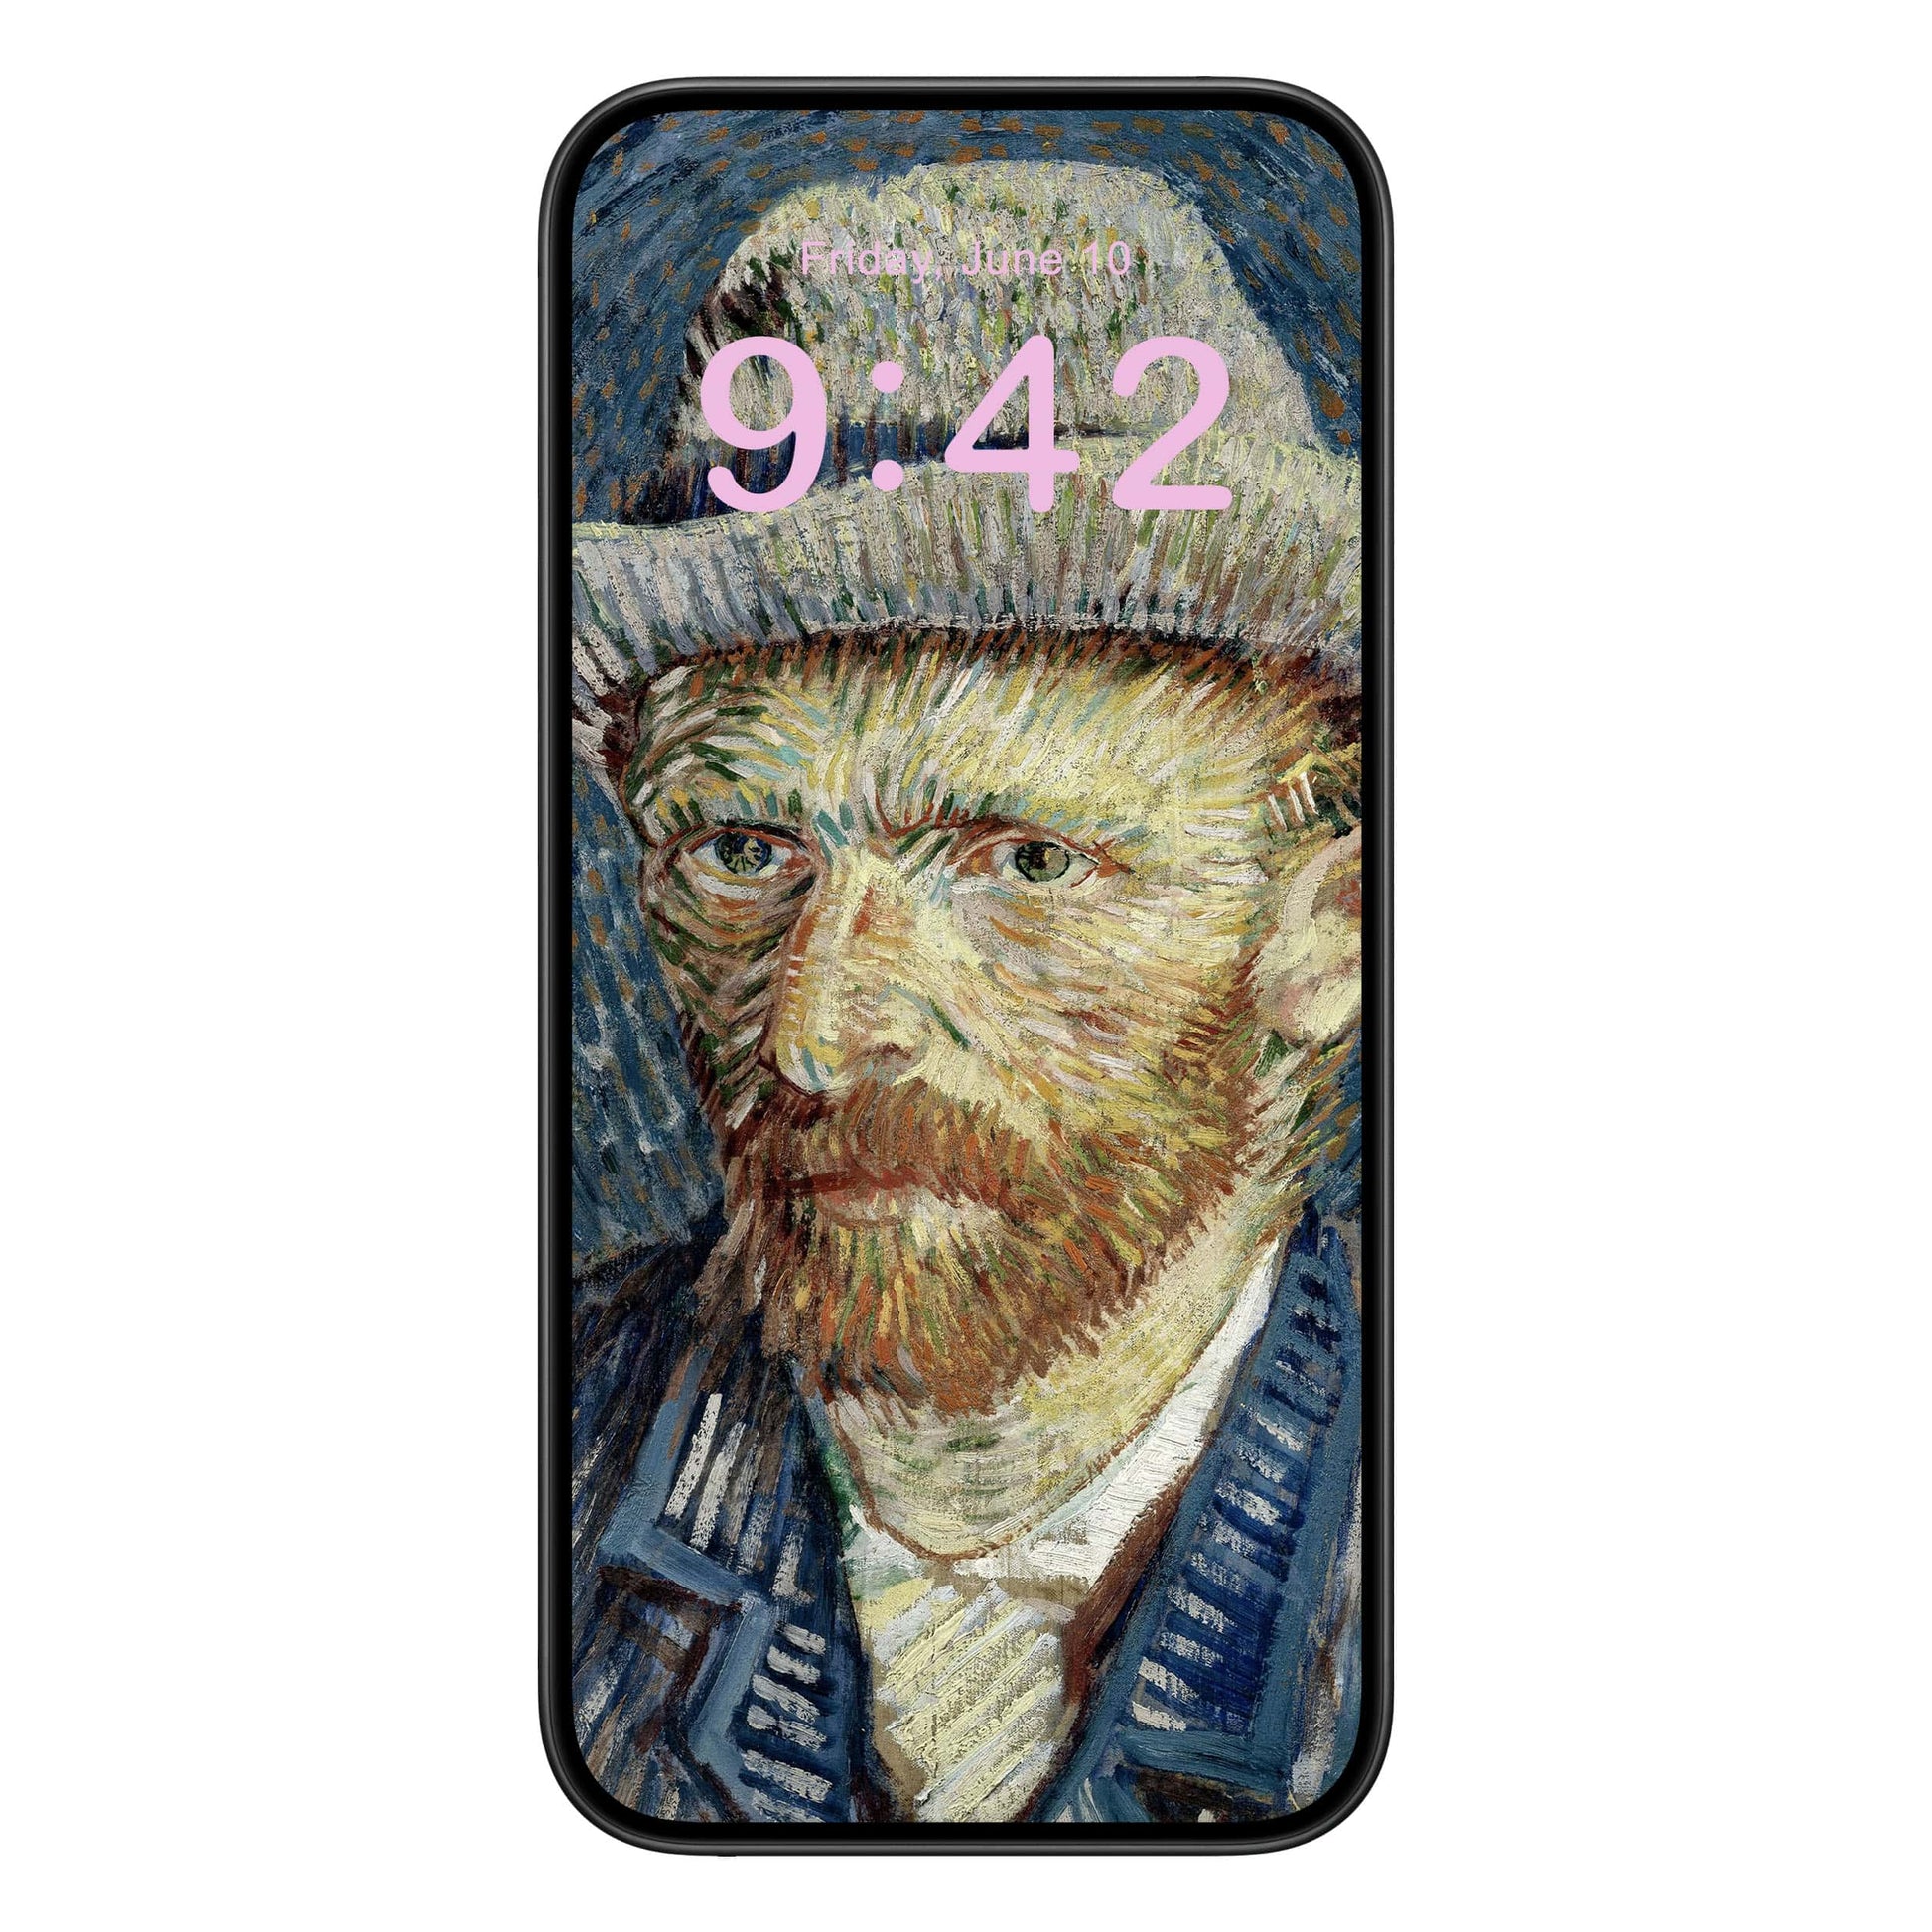 Cool van Gogh Phone Wallpaper Pink Text